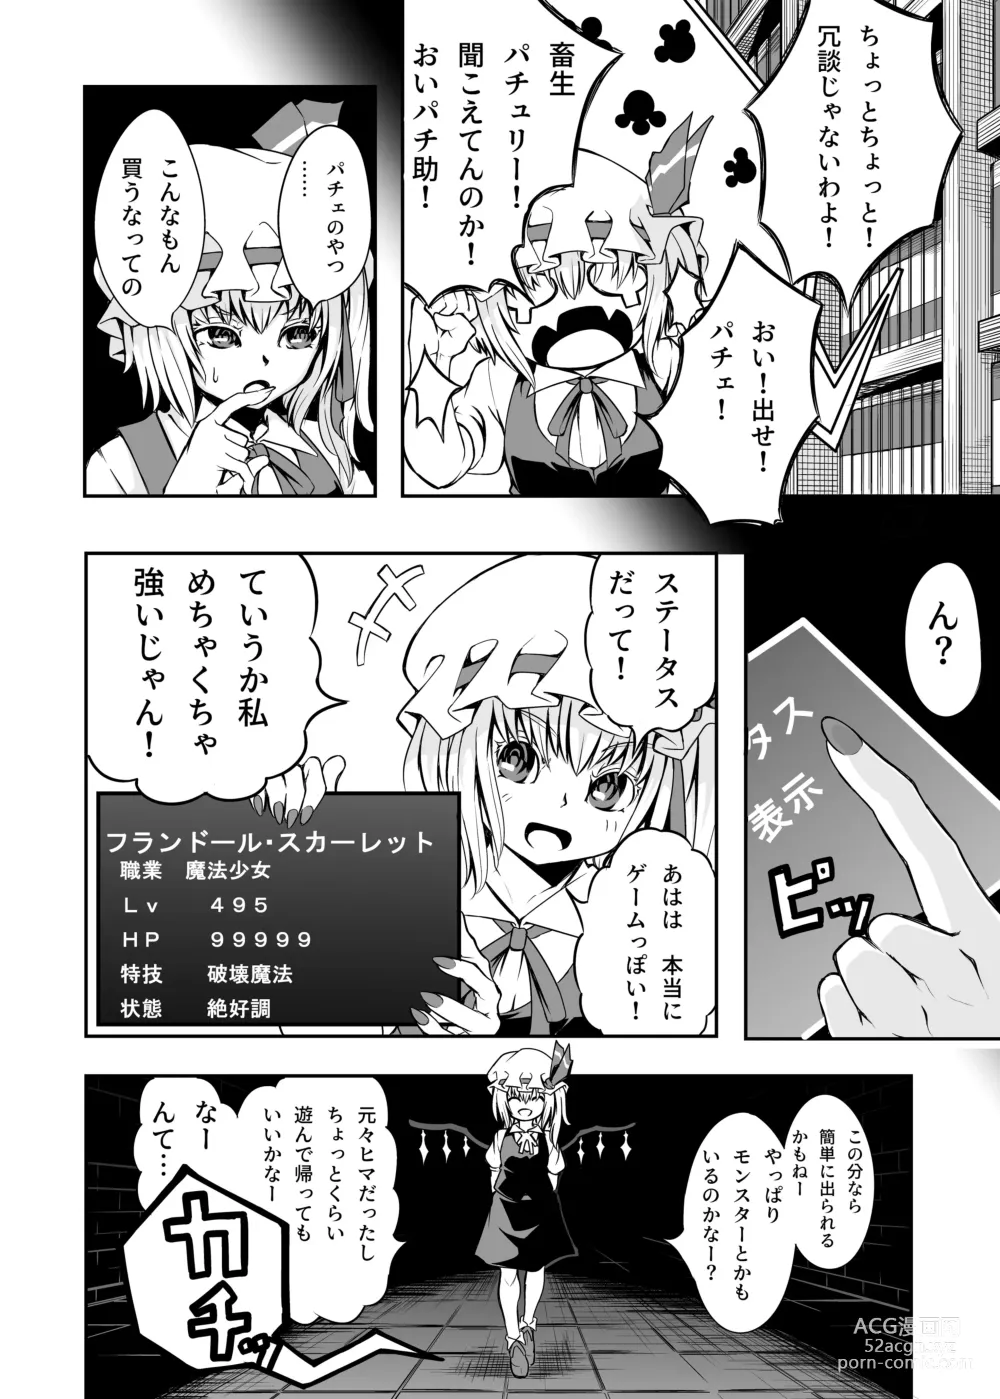 Page 5 of doujinshi Flan-chan and ETD